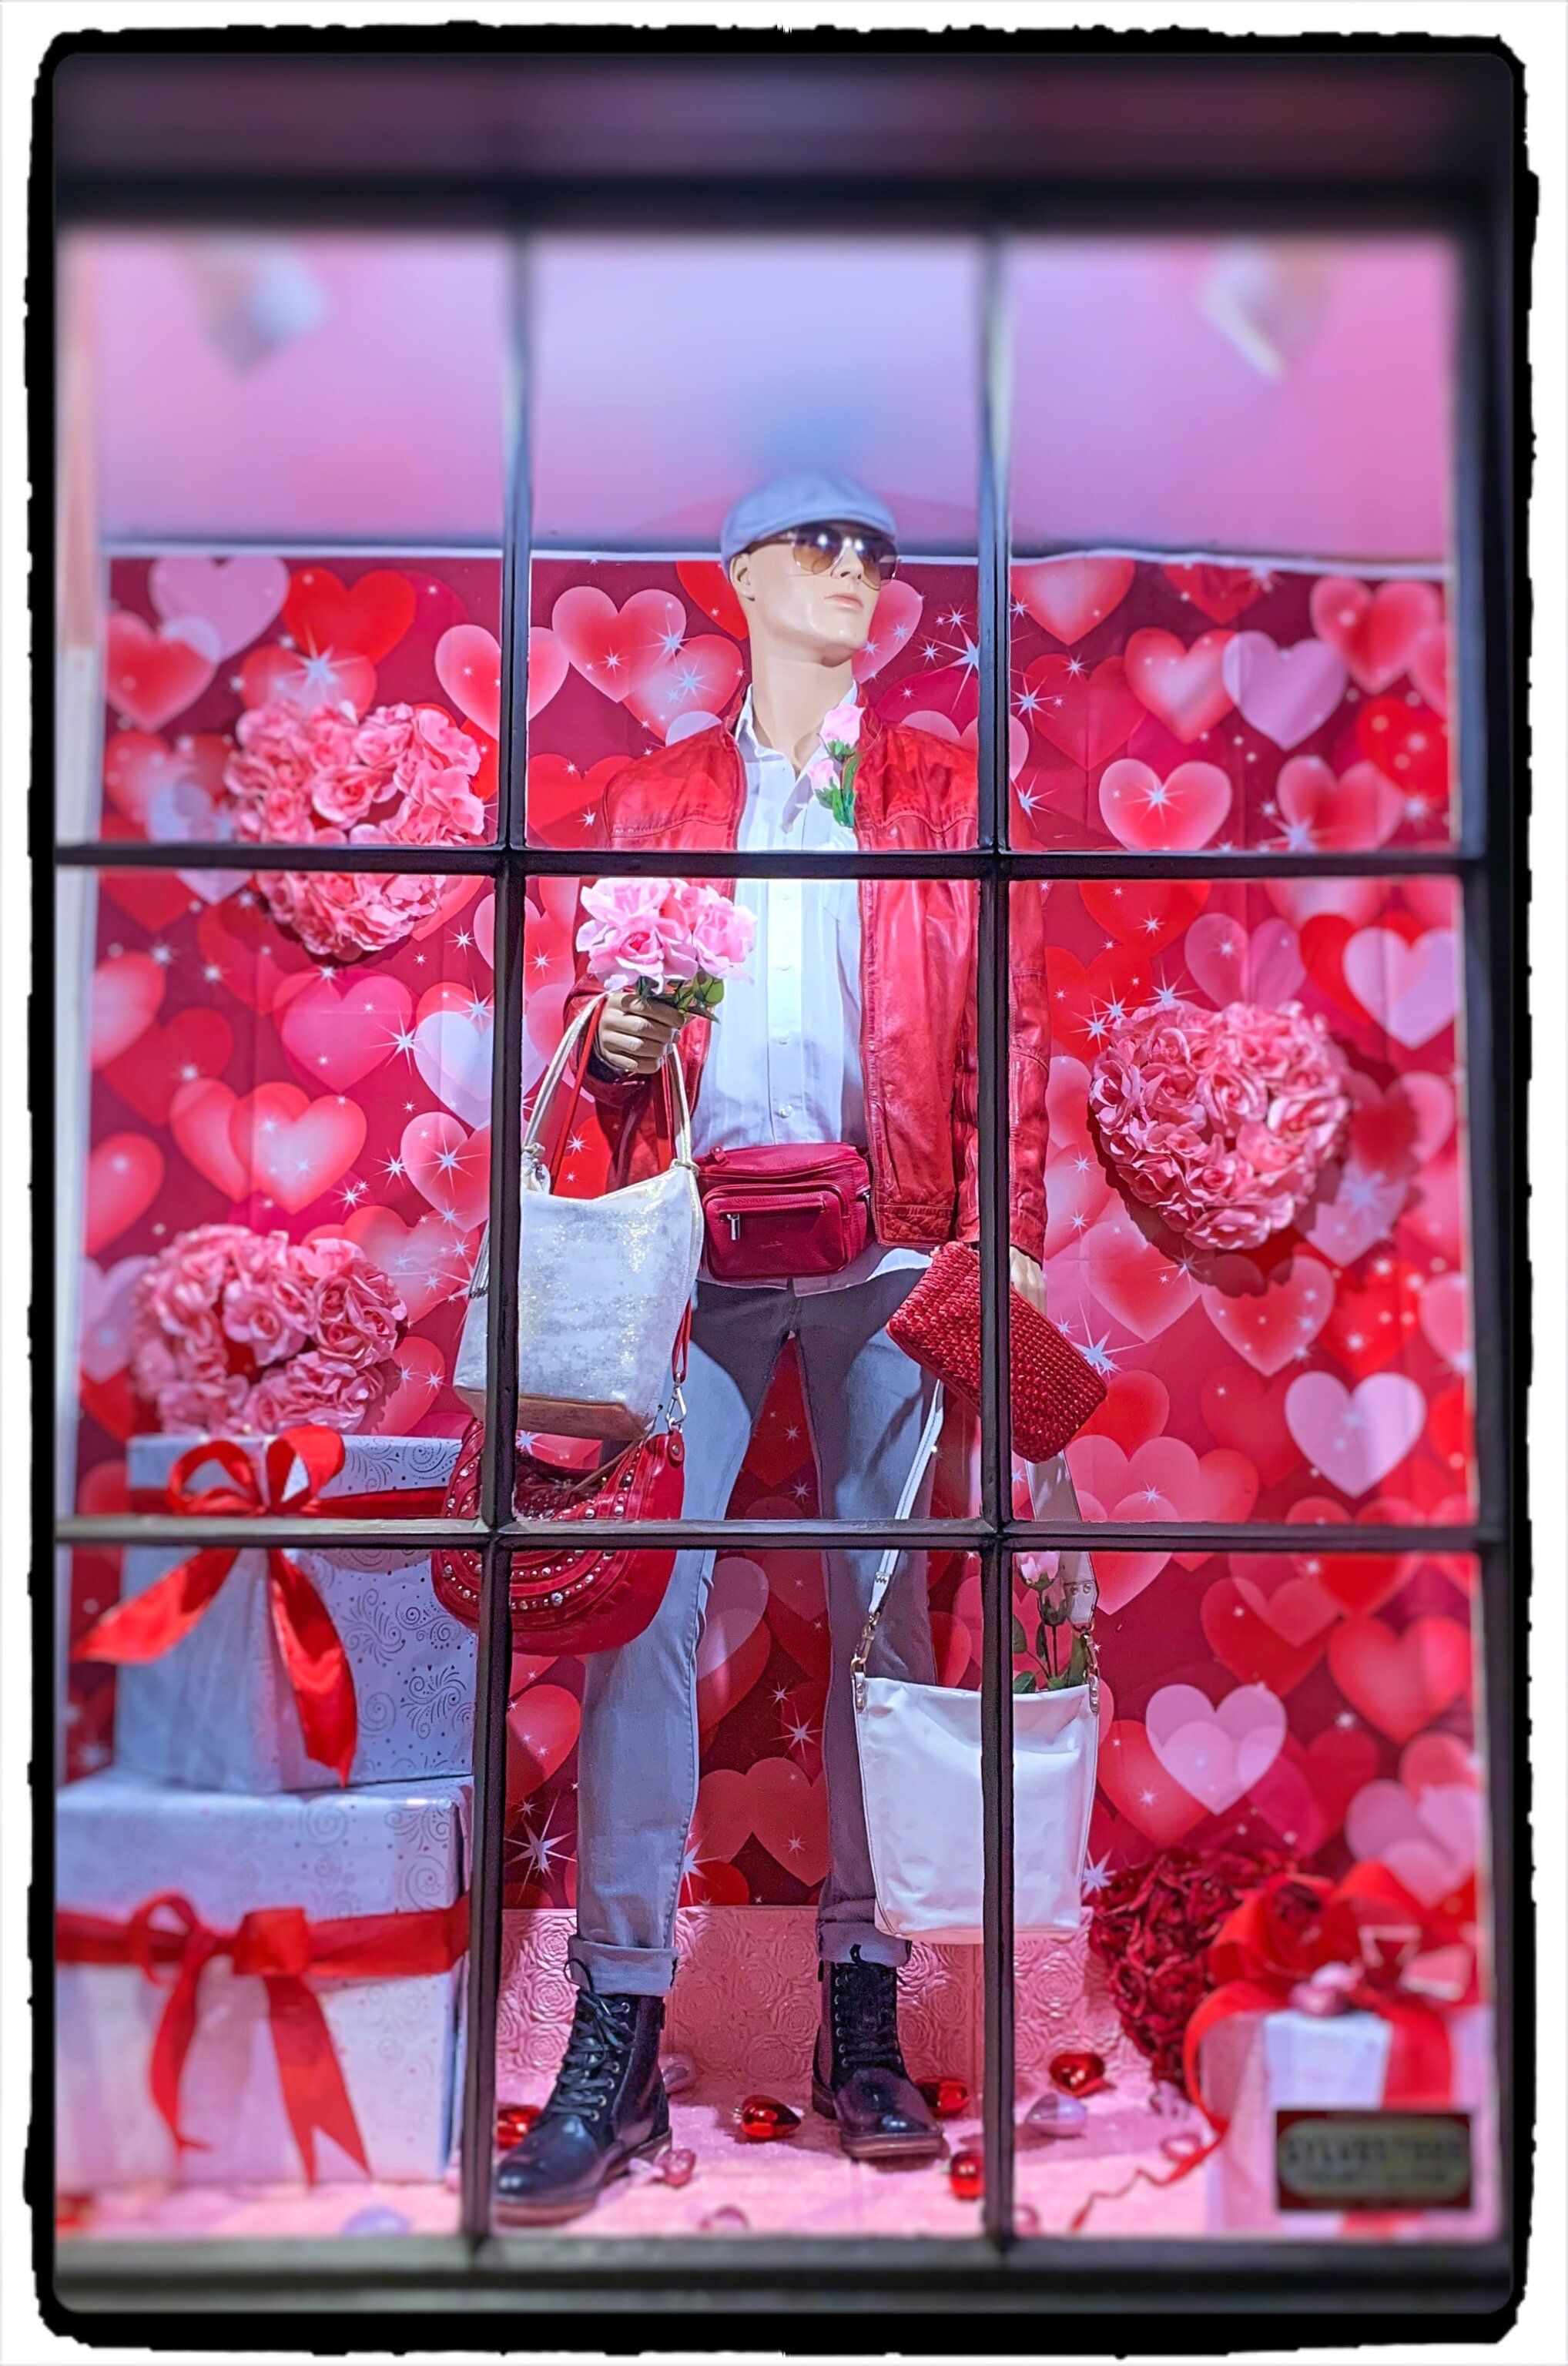 Valentine’s Day 2020 Window Display